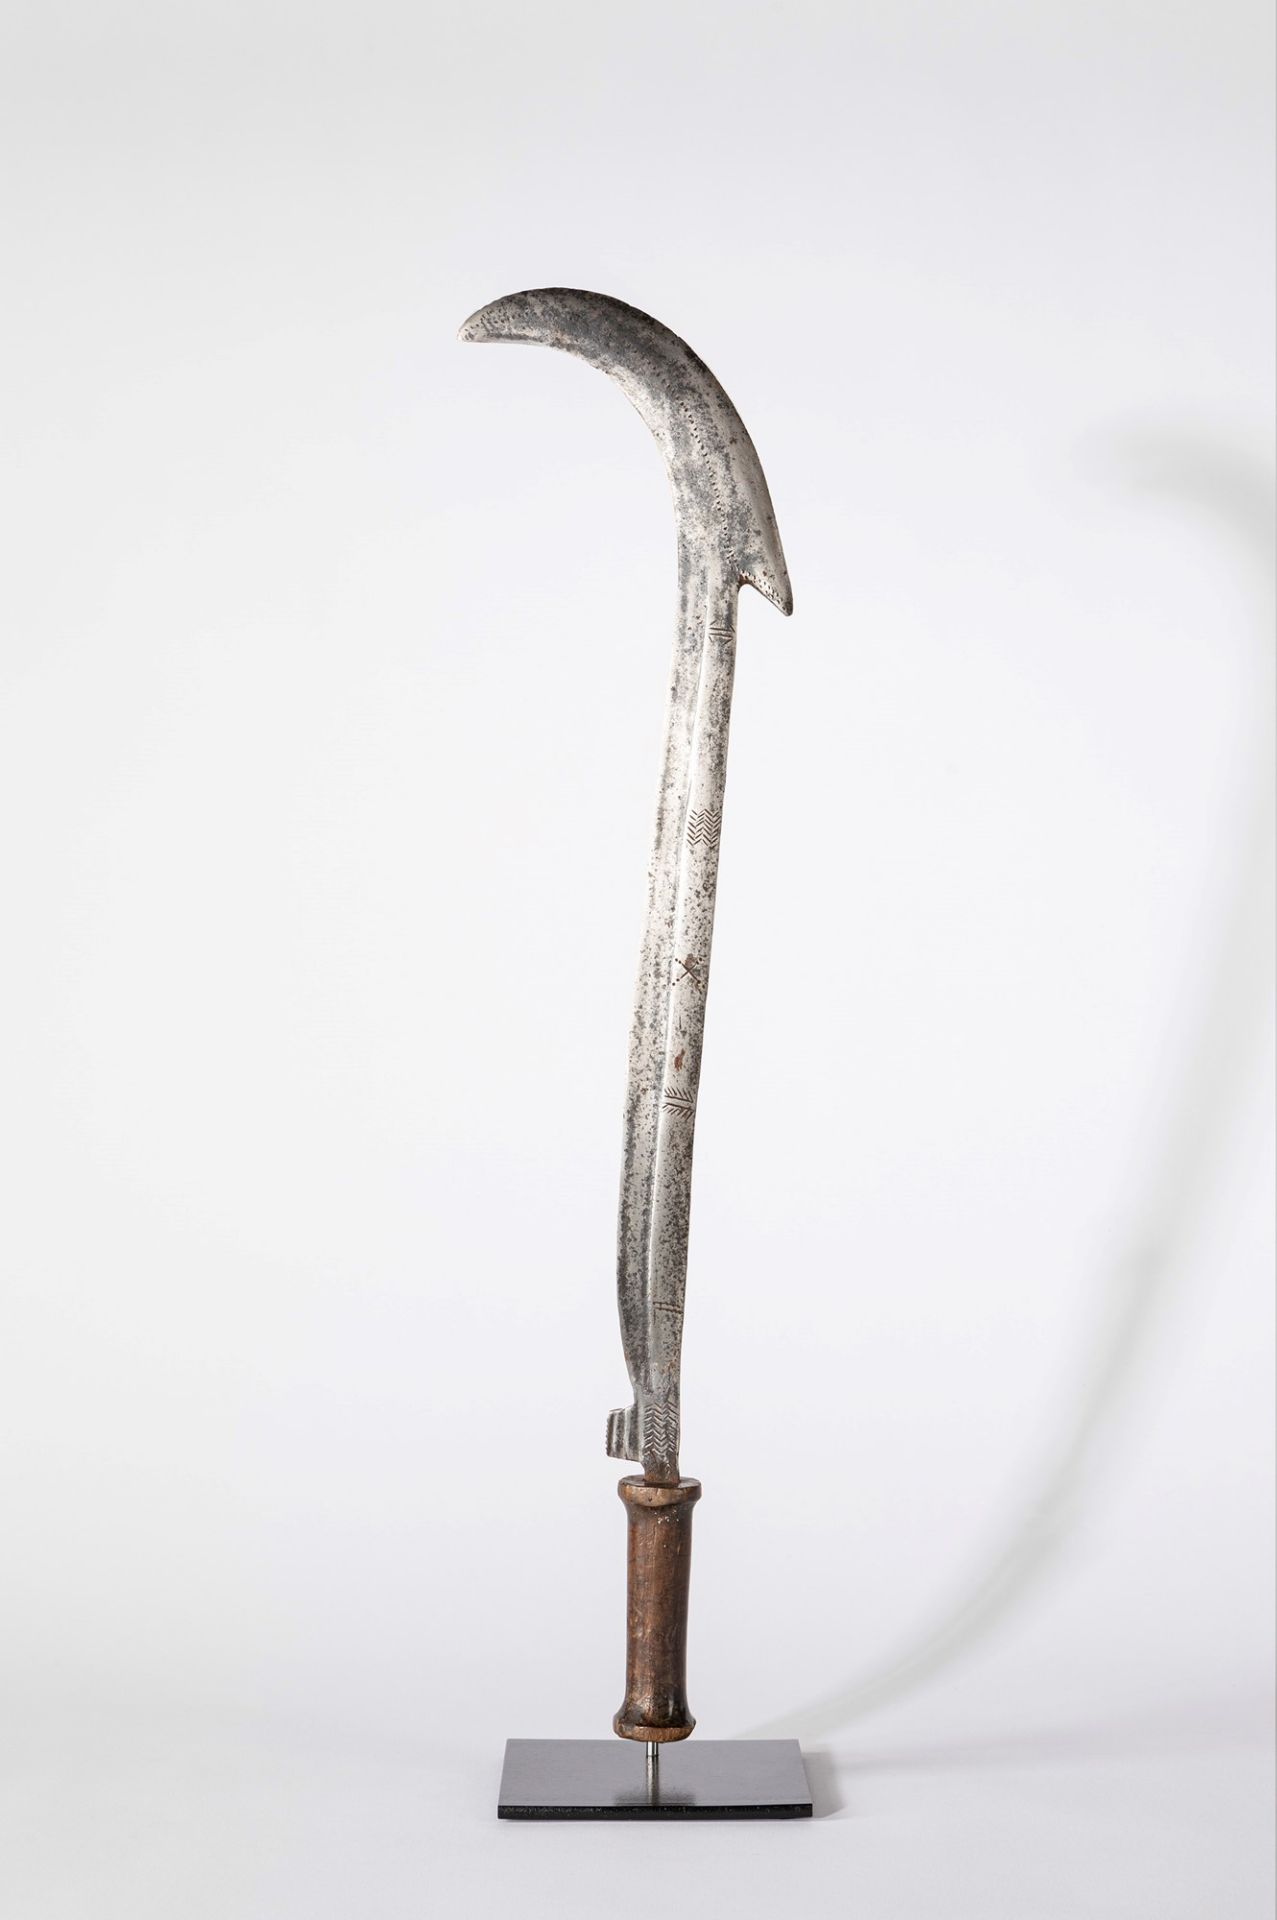 BANDIA – BINJA – NZAKARA Congo Kinshasa - Ornamental saber